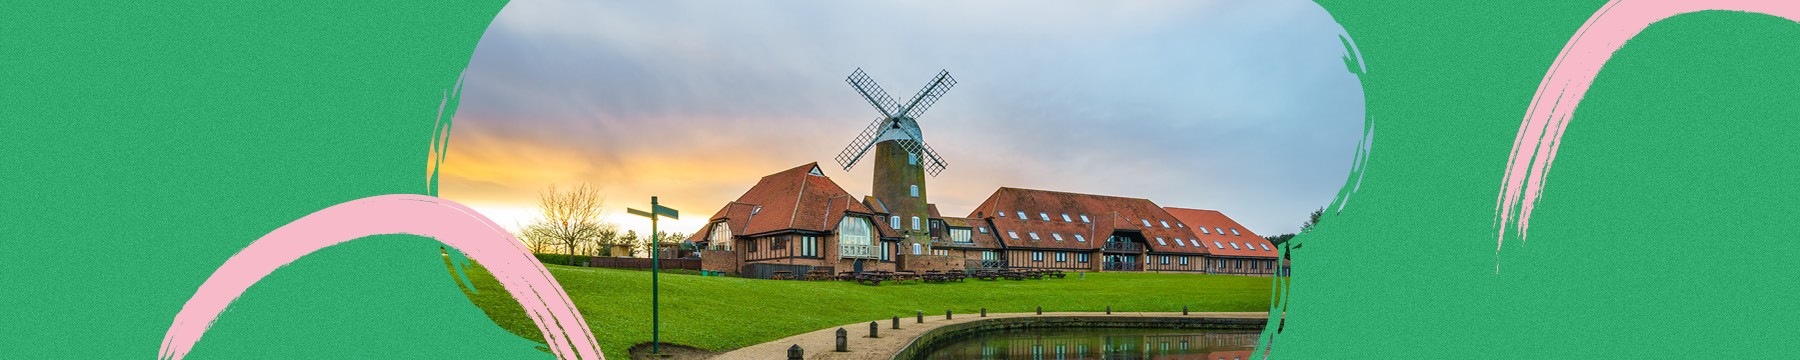 Windmill in Marston Vale